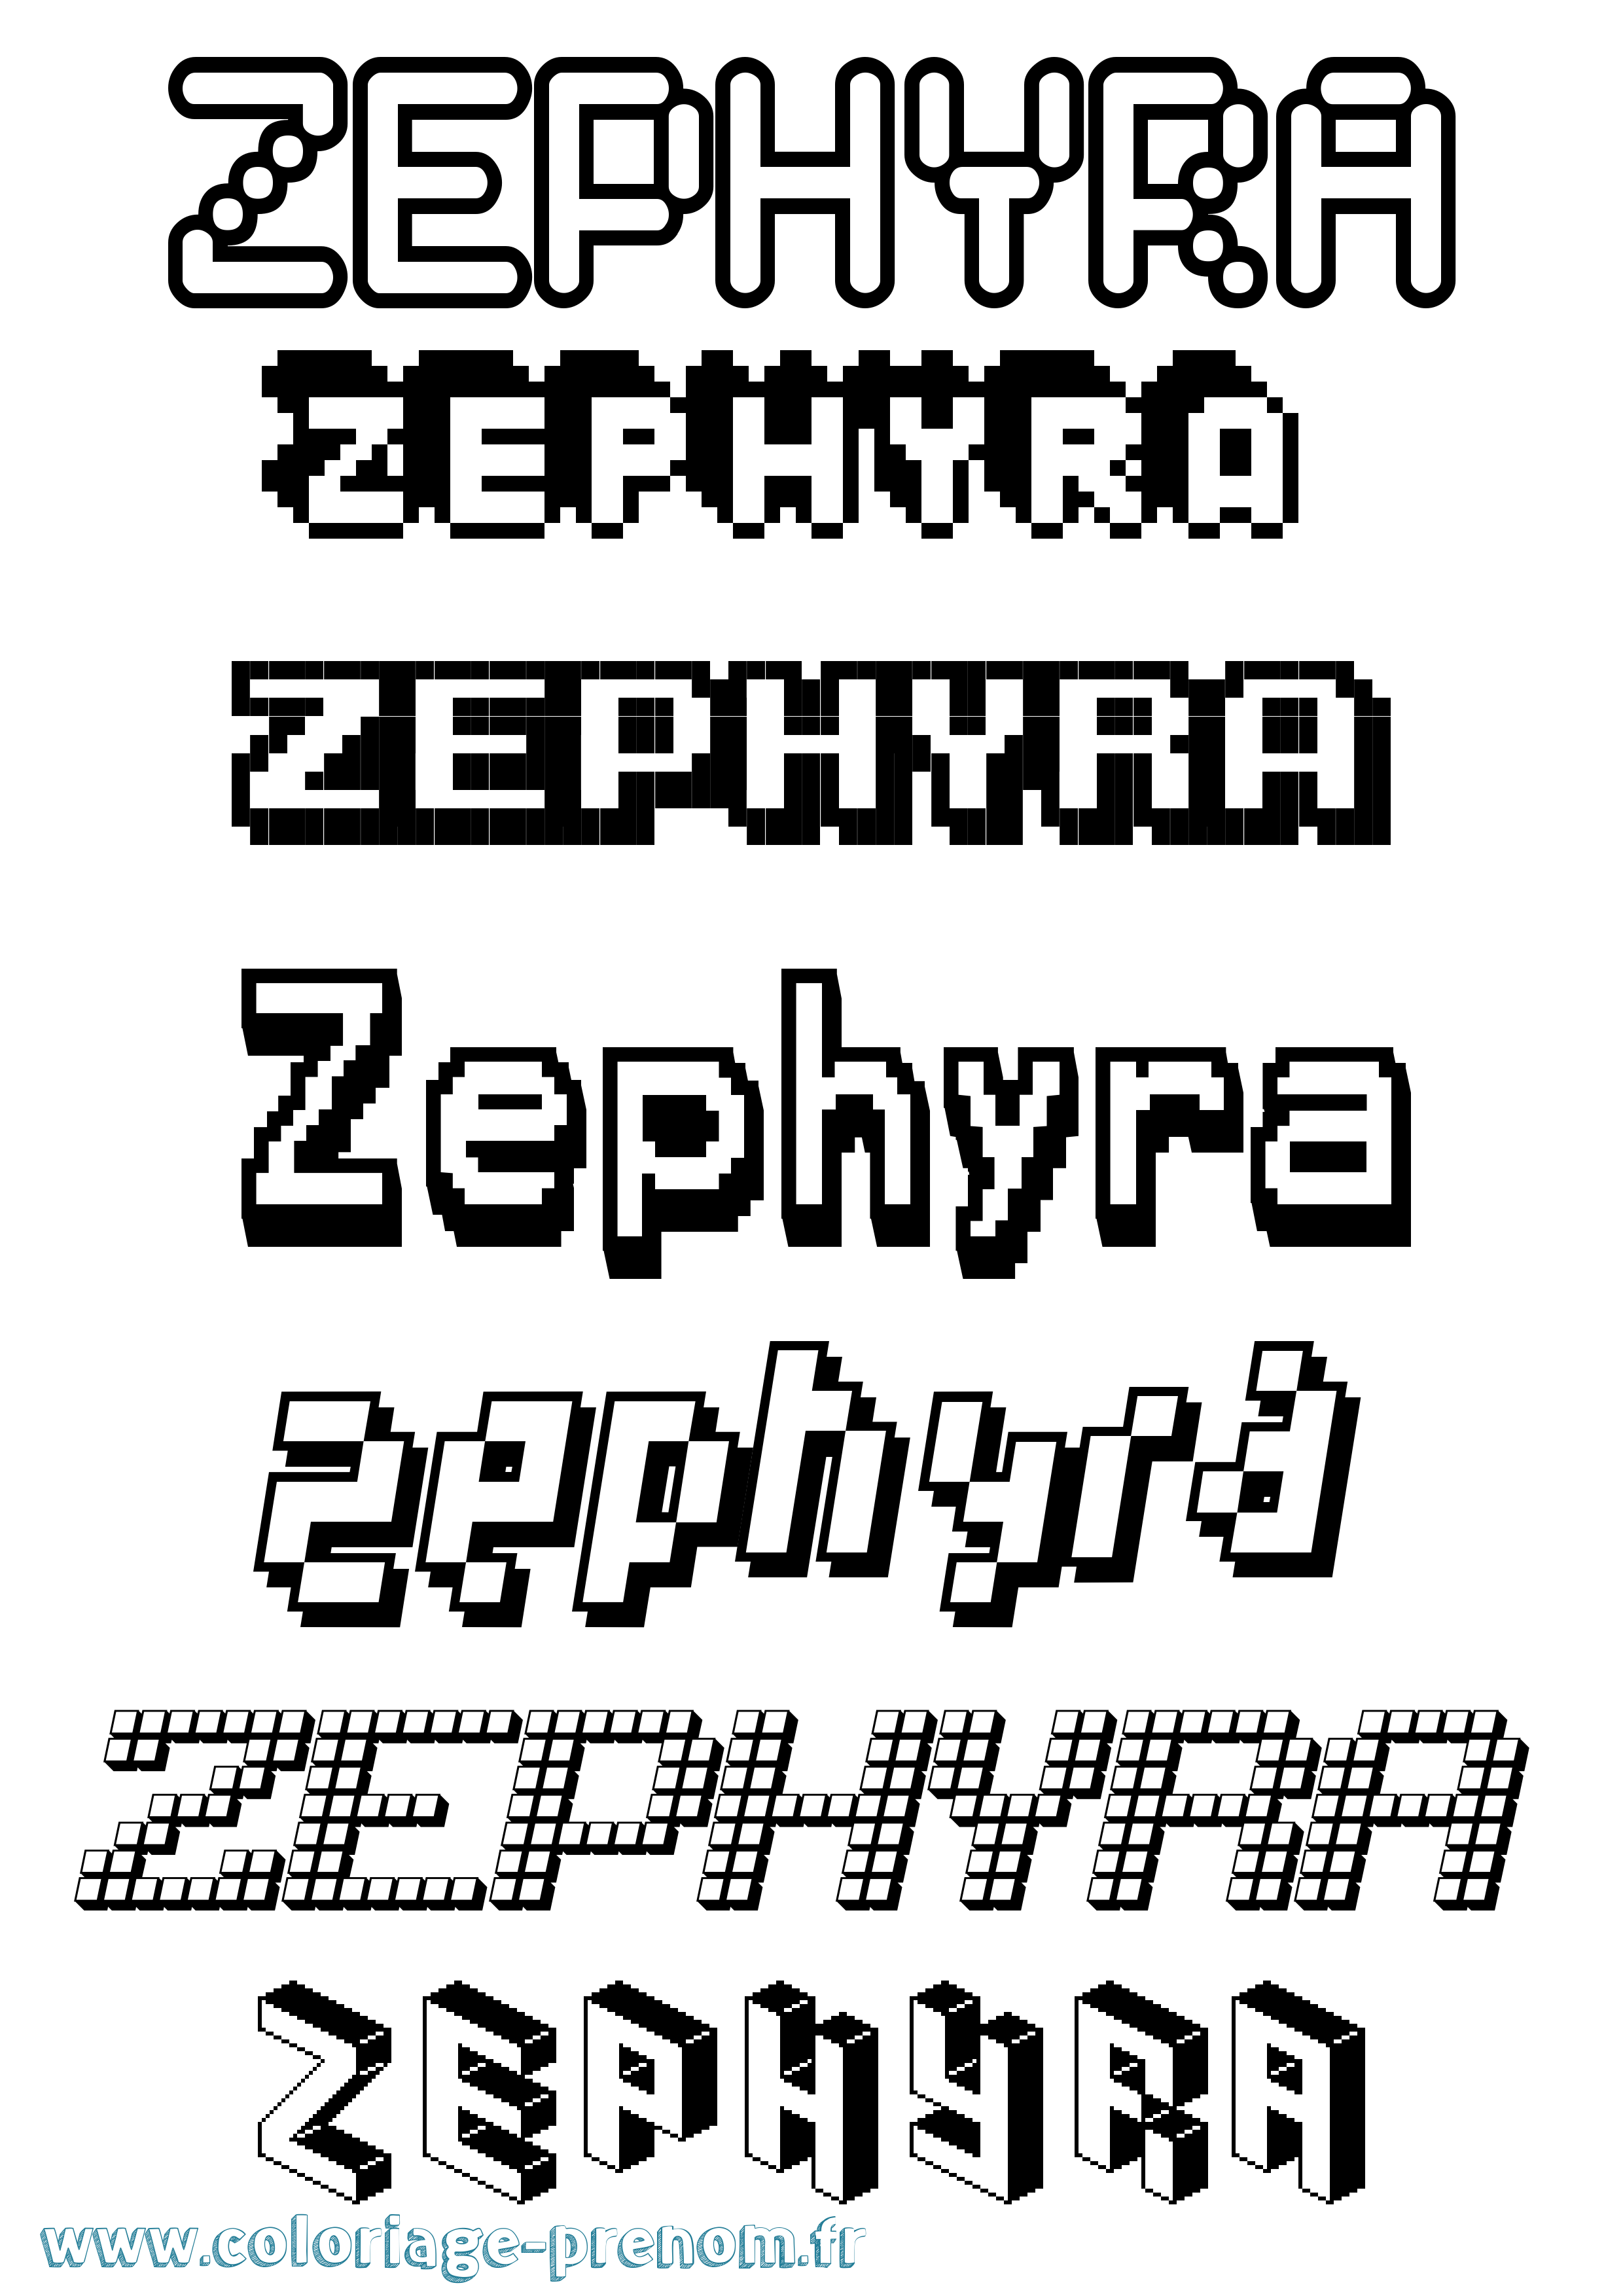 Coloriage prénom Zephyra Pixel